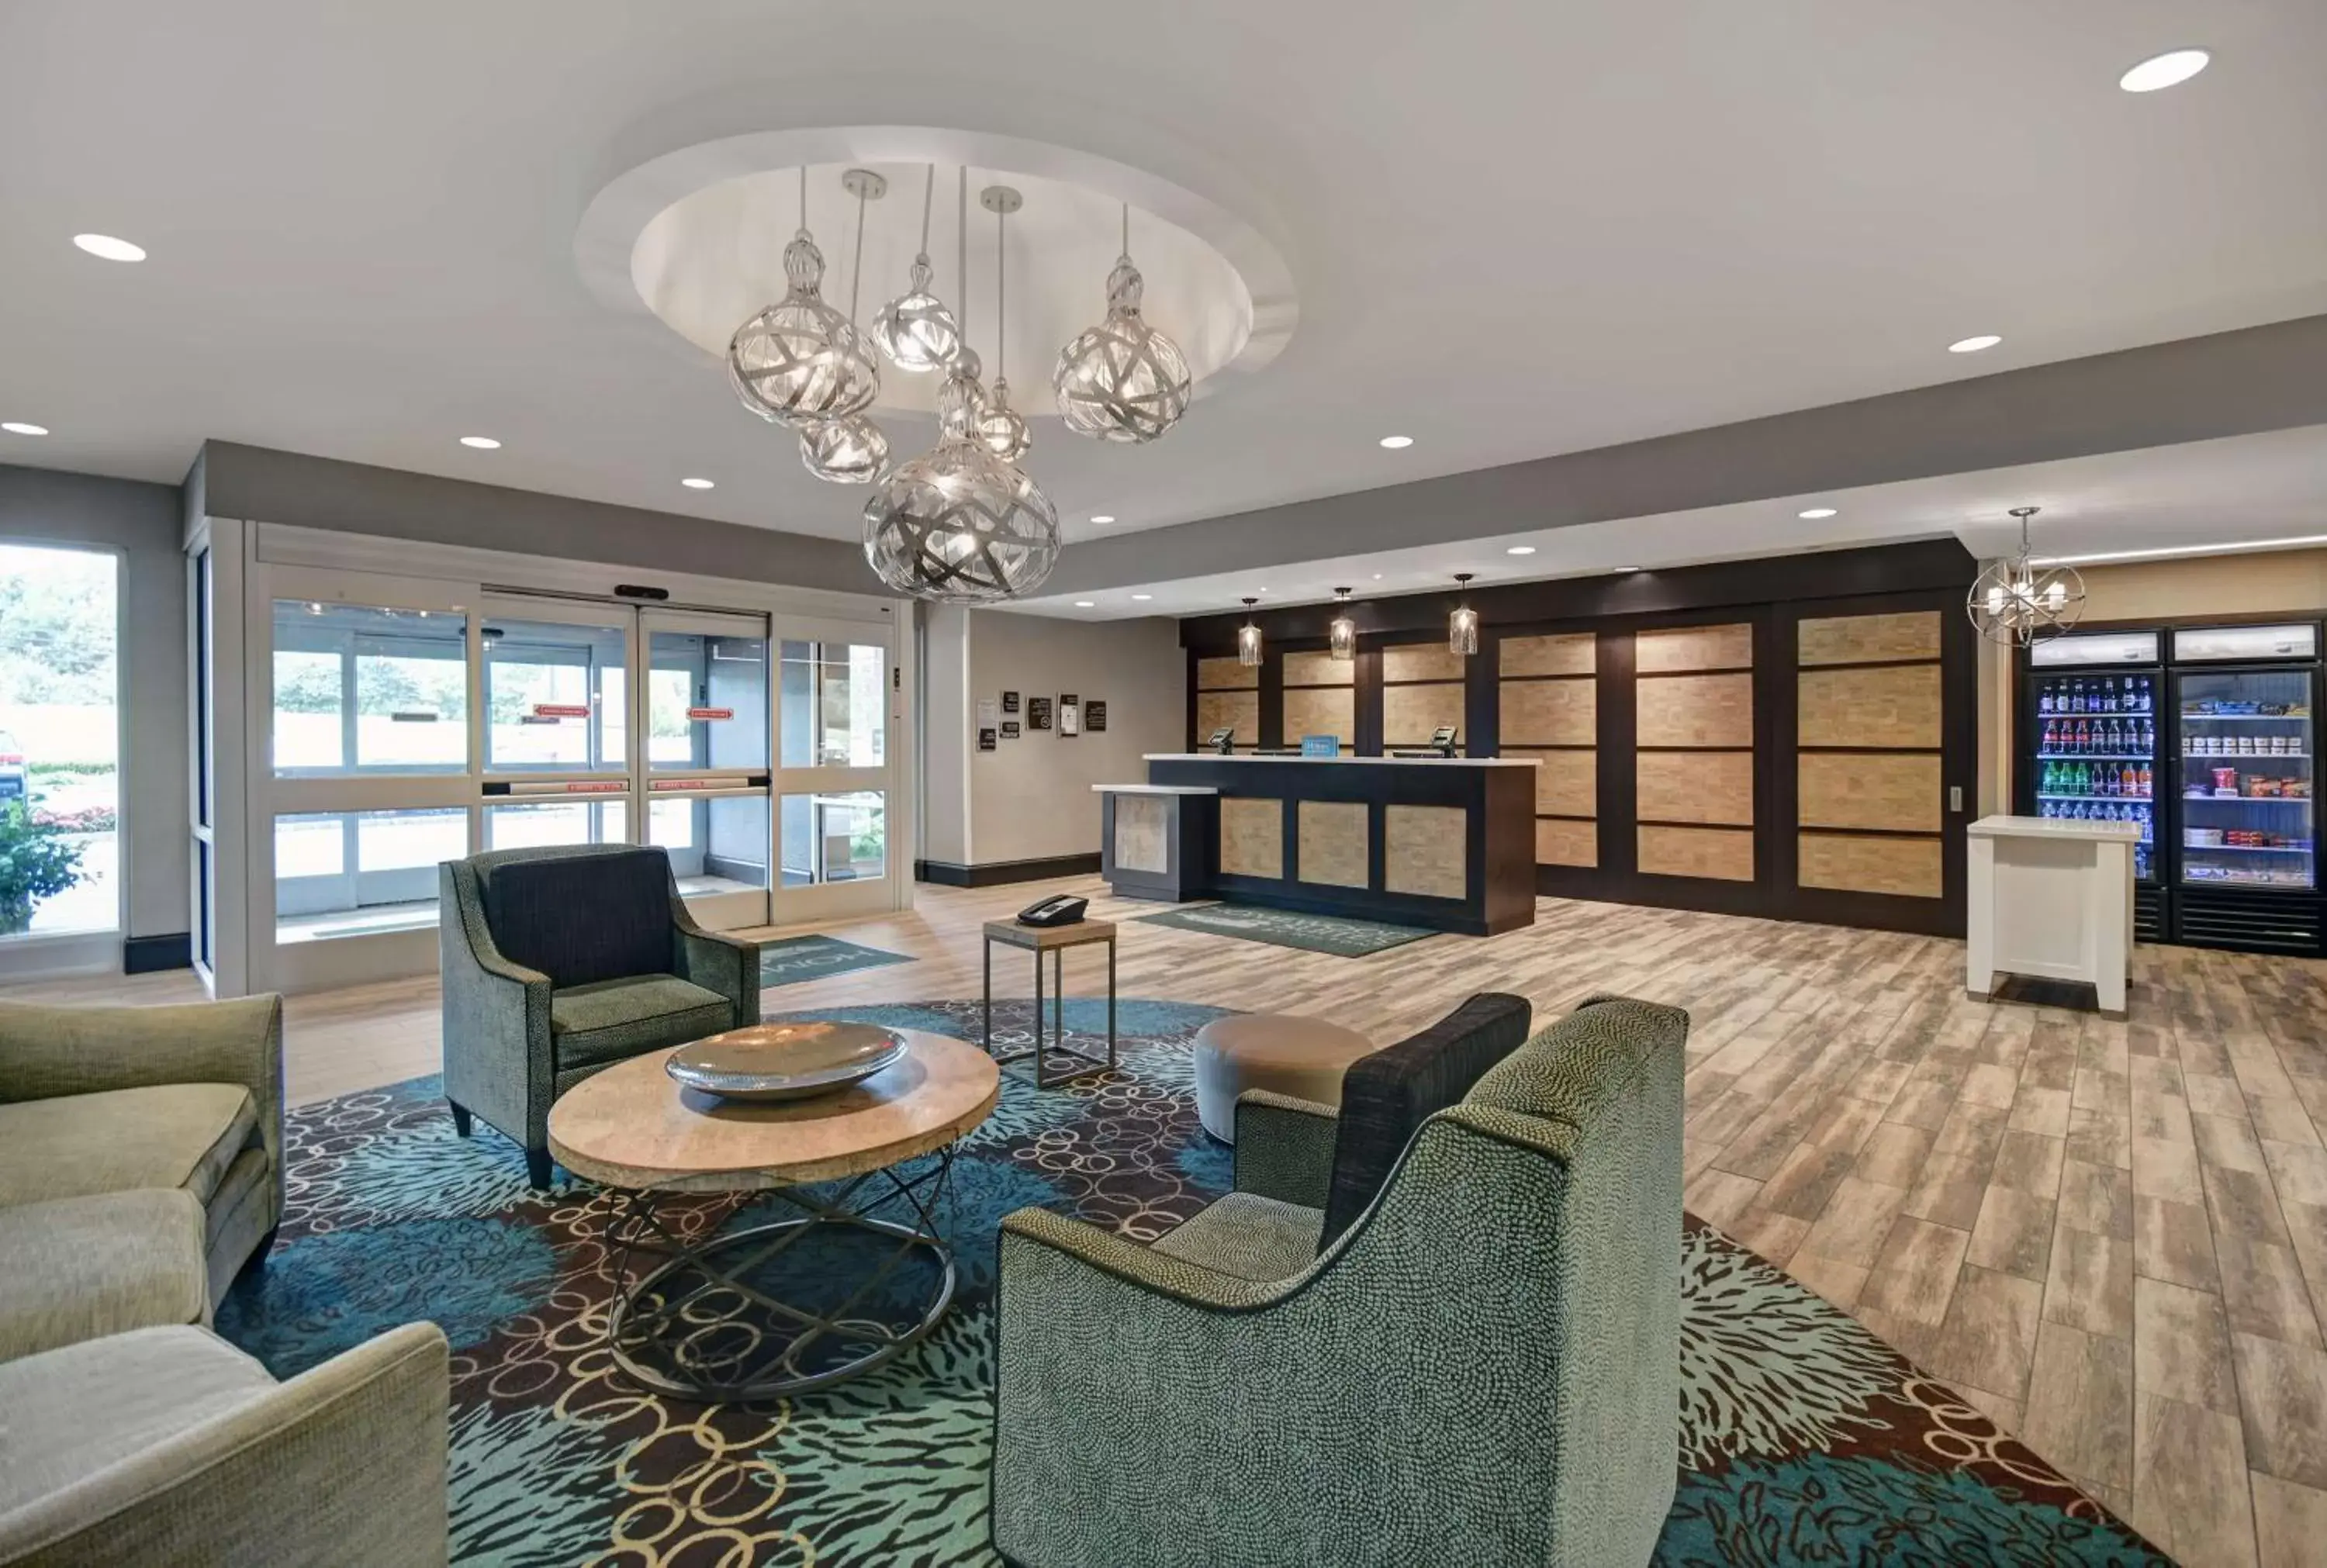 Lobby or reception in Homewood Suites by Hilton Hamilton, NJ